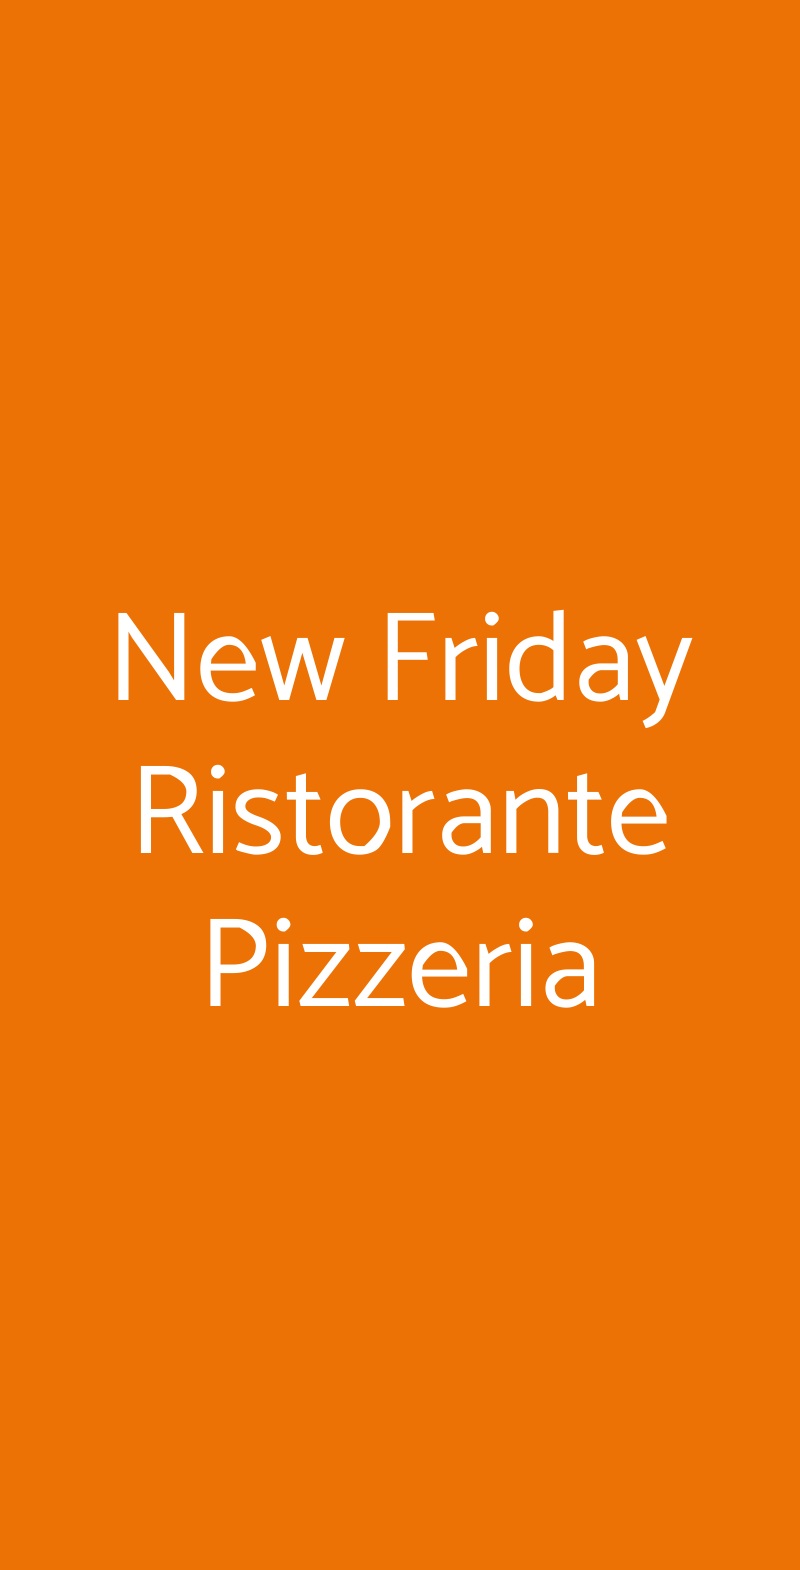 New Friday Ristorante Pizzeria Milano menù 1 pagina